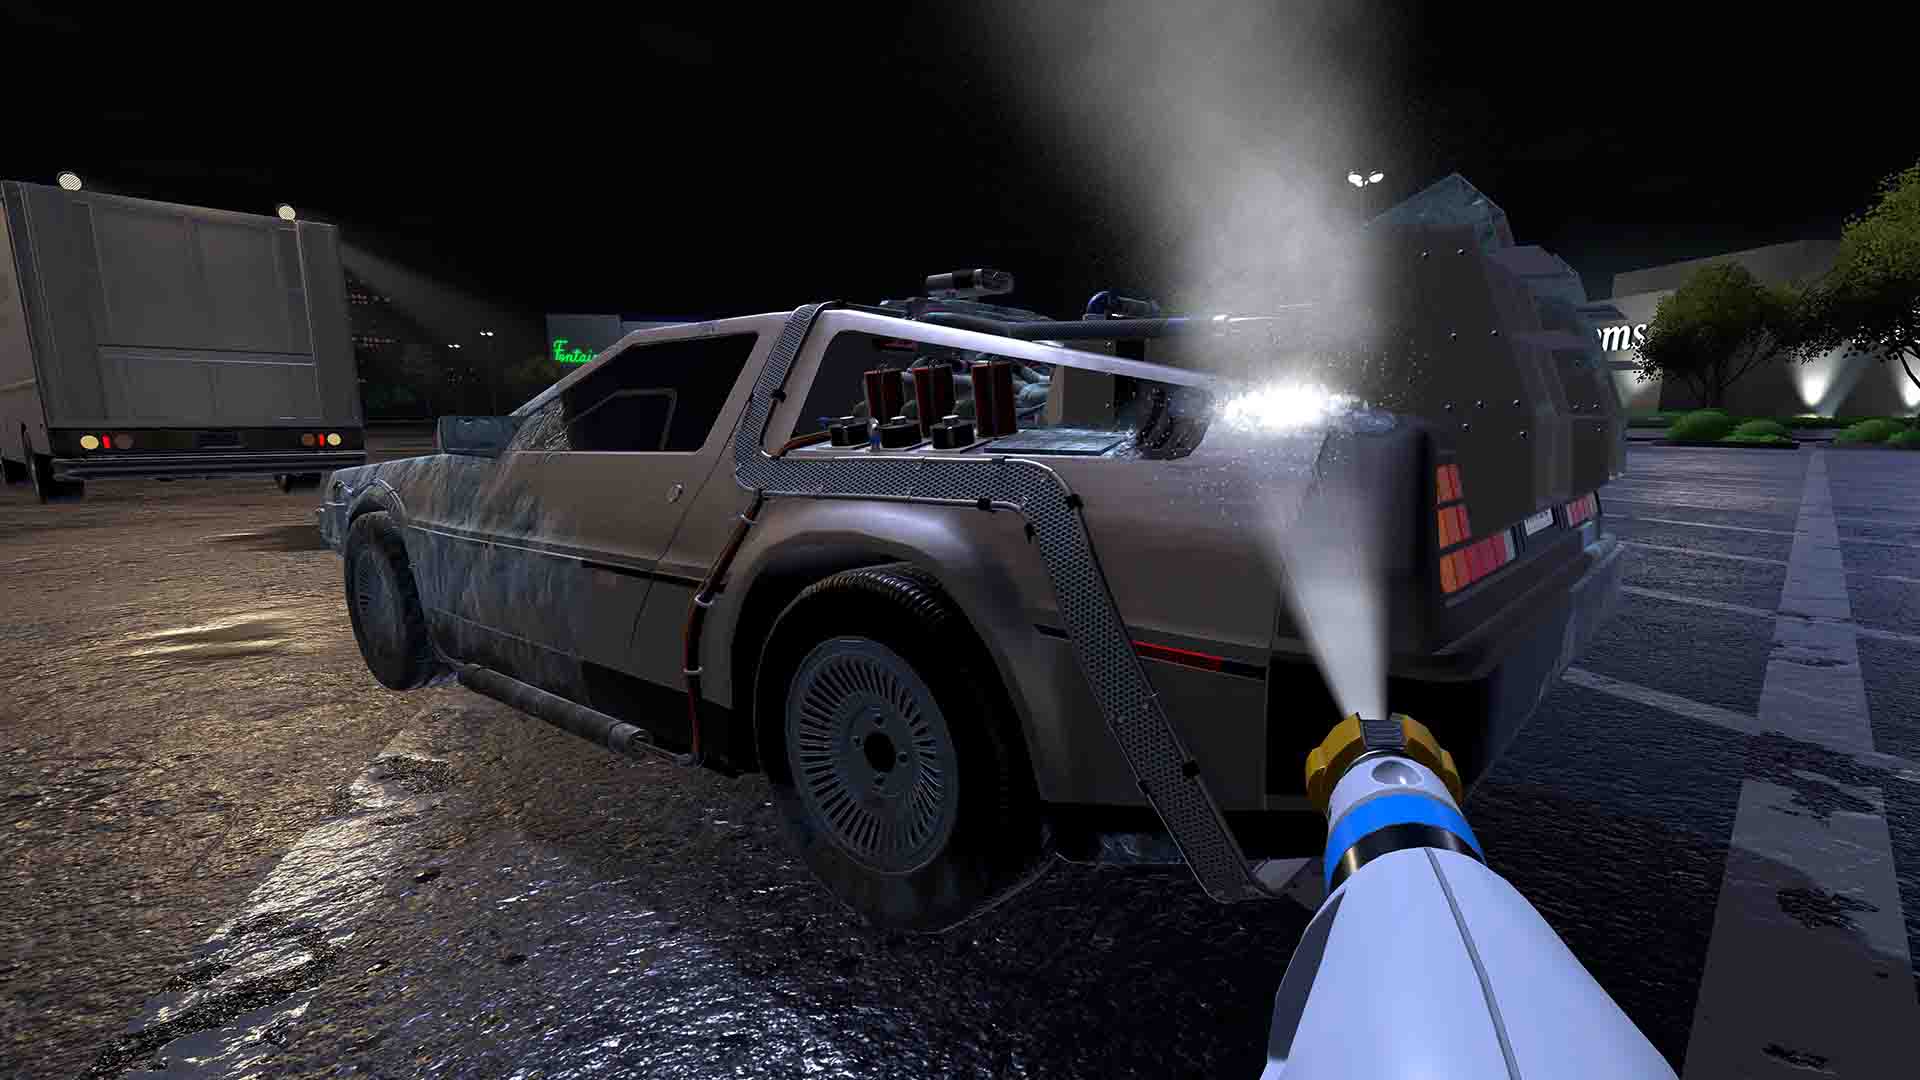 PowerWash Simulator VR - Official Release Date Reveal Trailer 